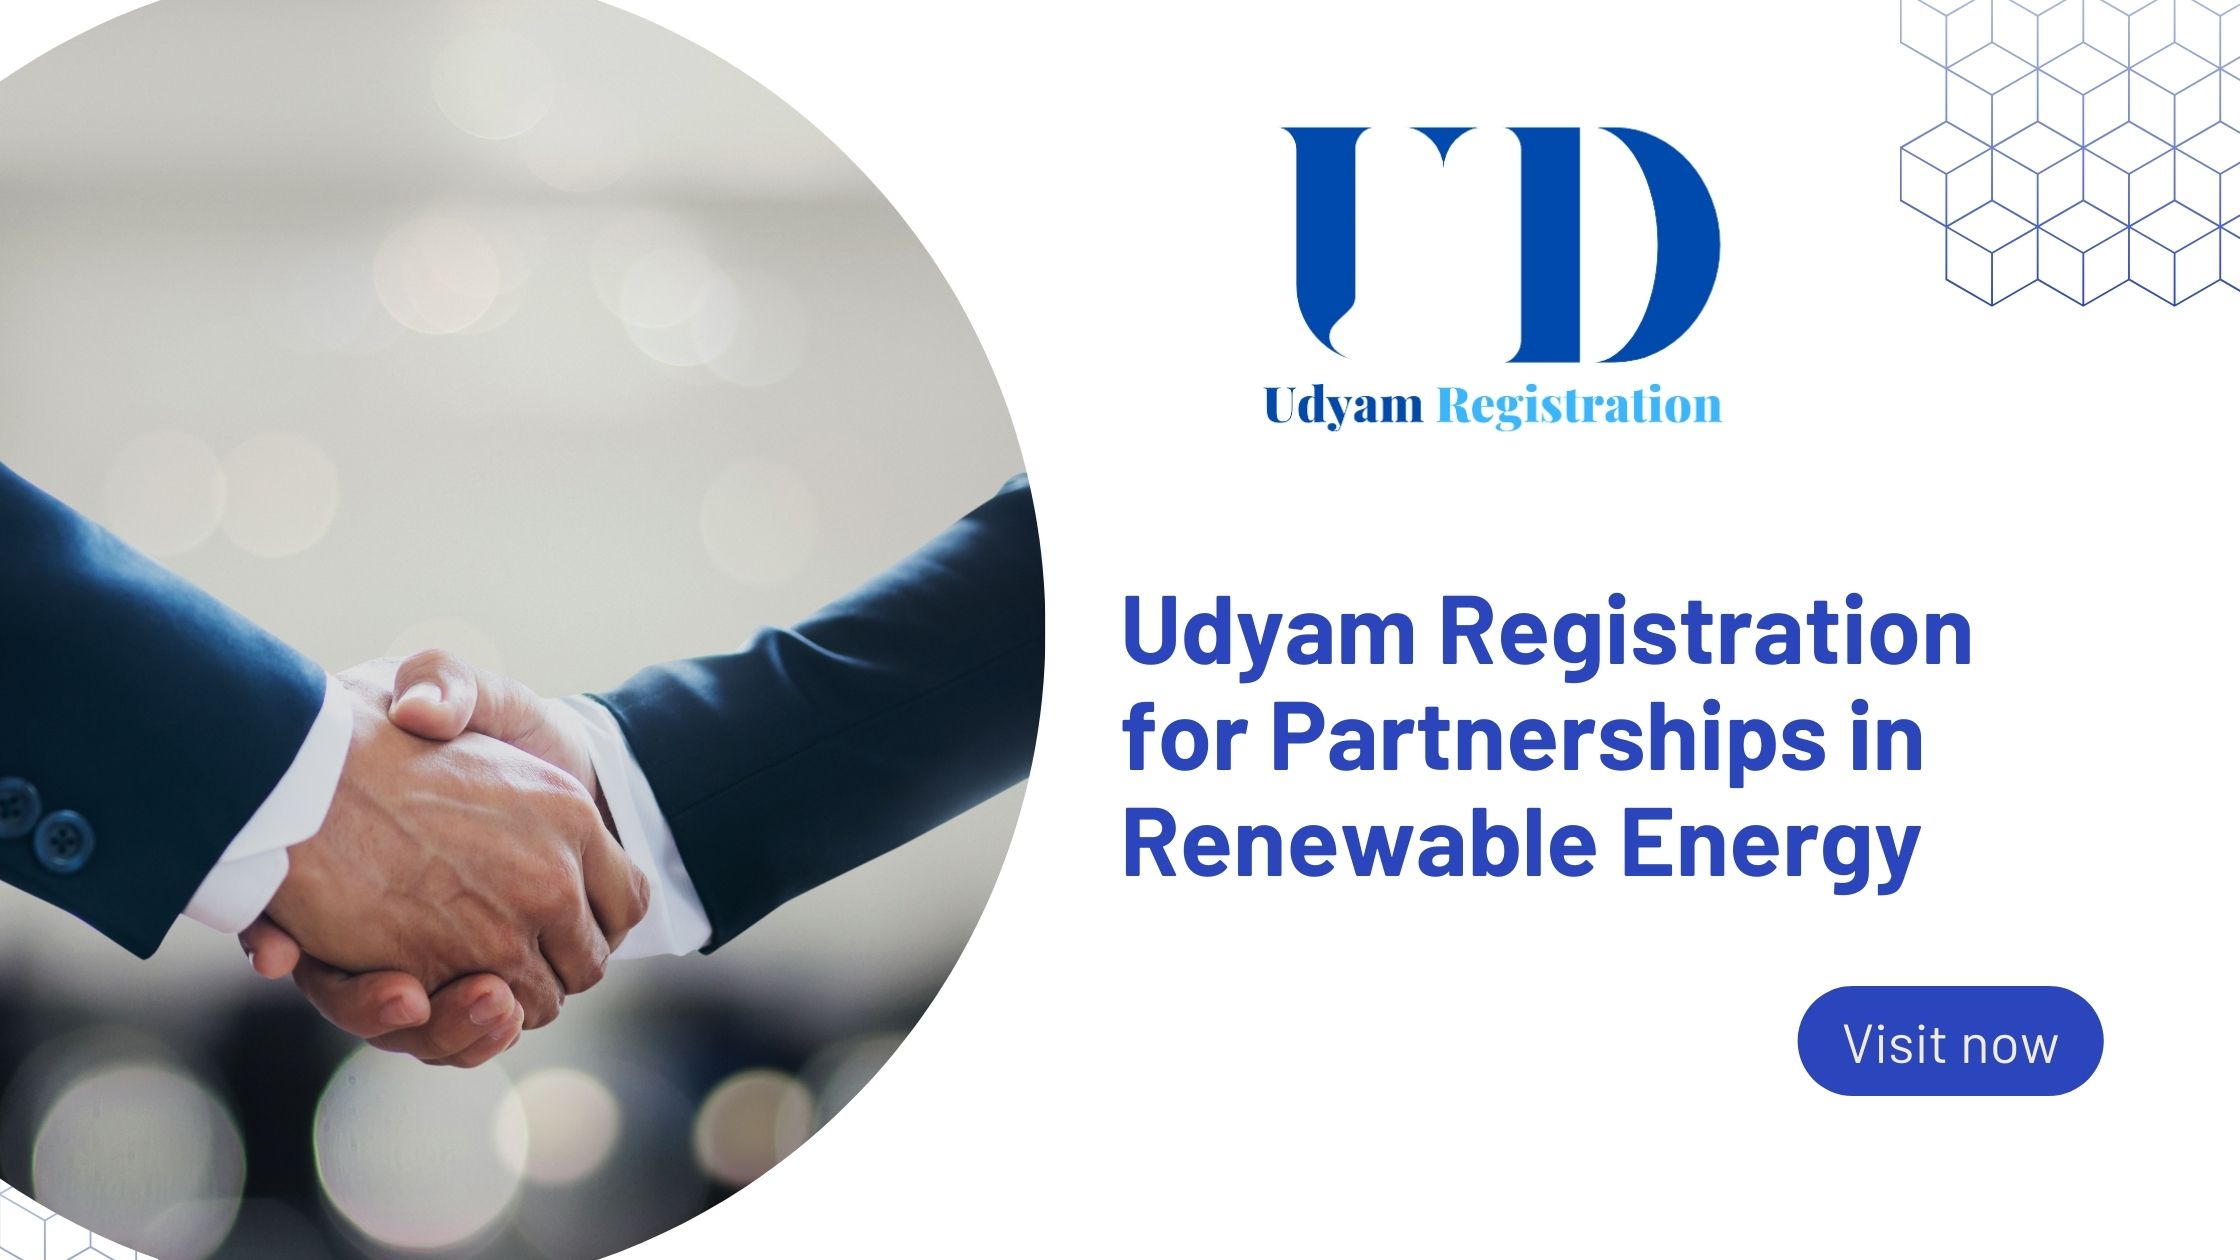 Udyam Registration for Partnerships in Renewable Energy